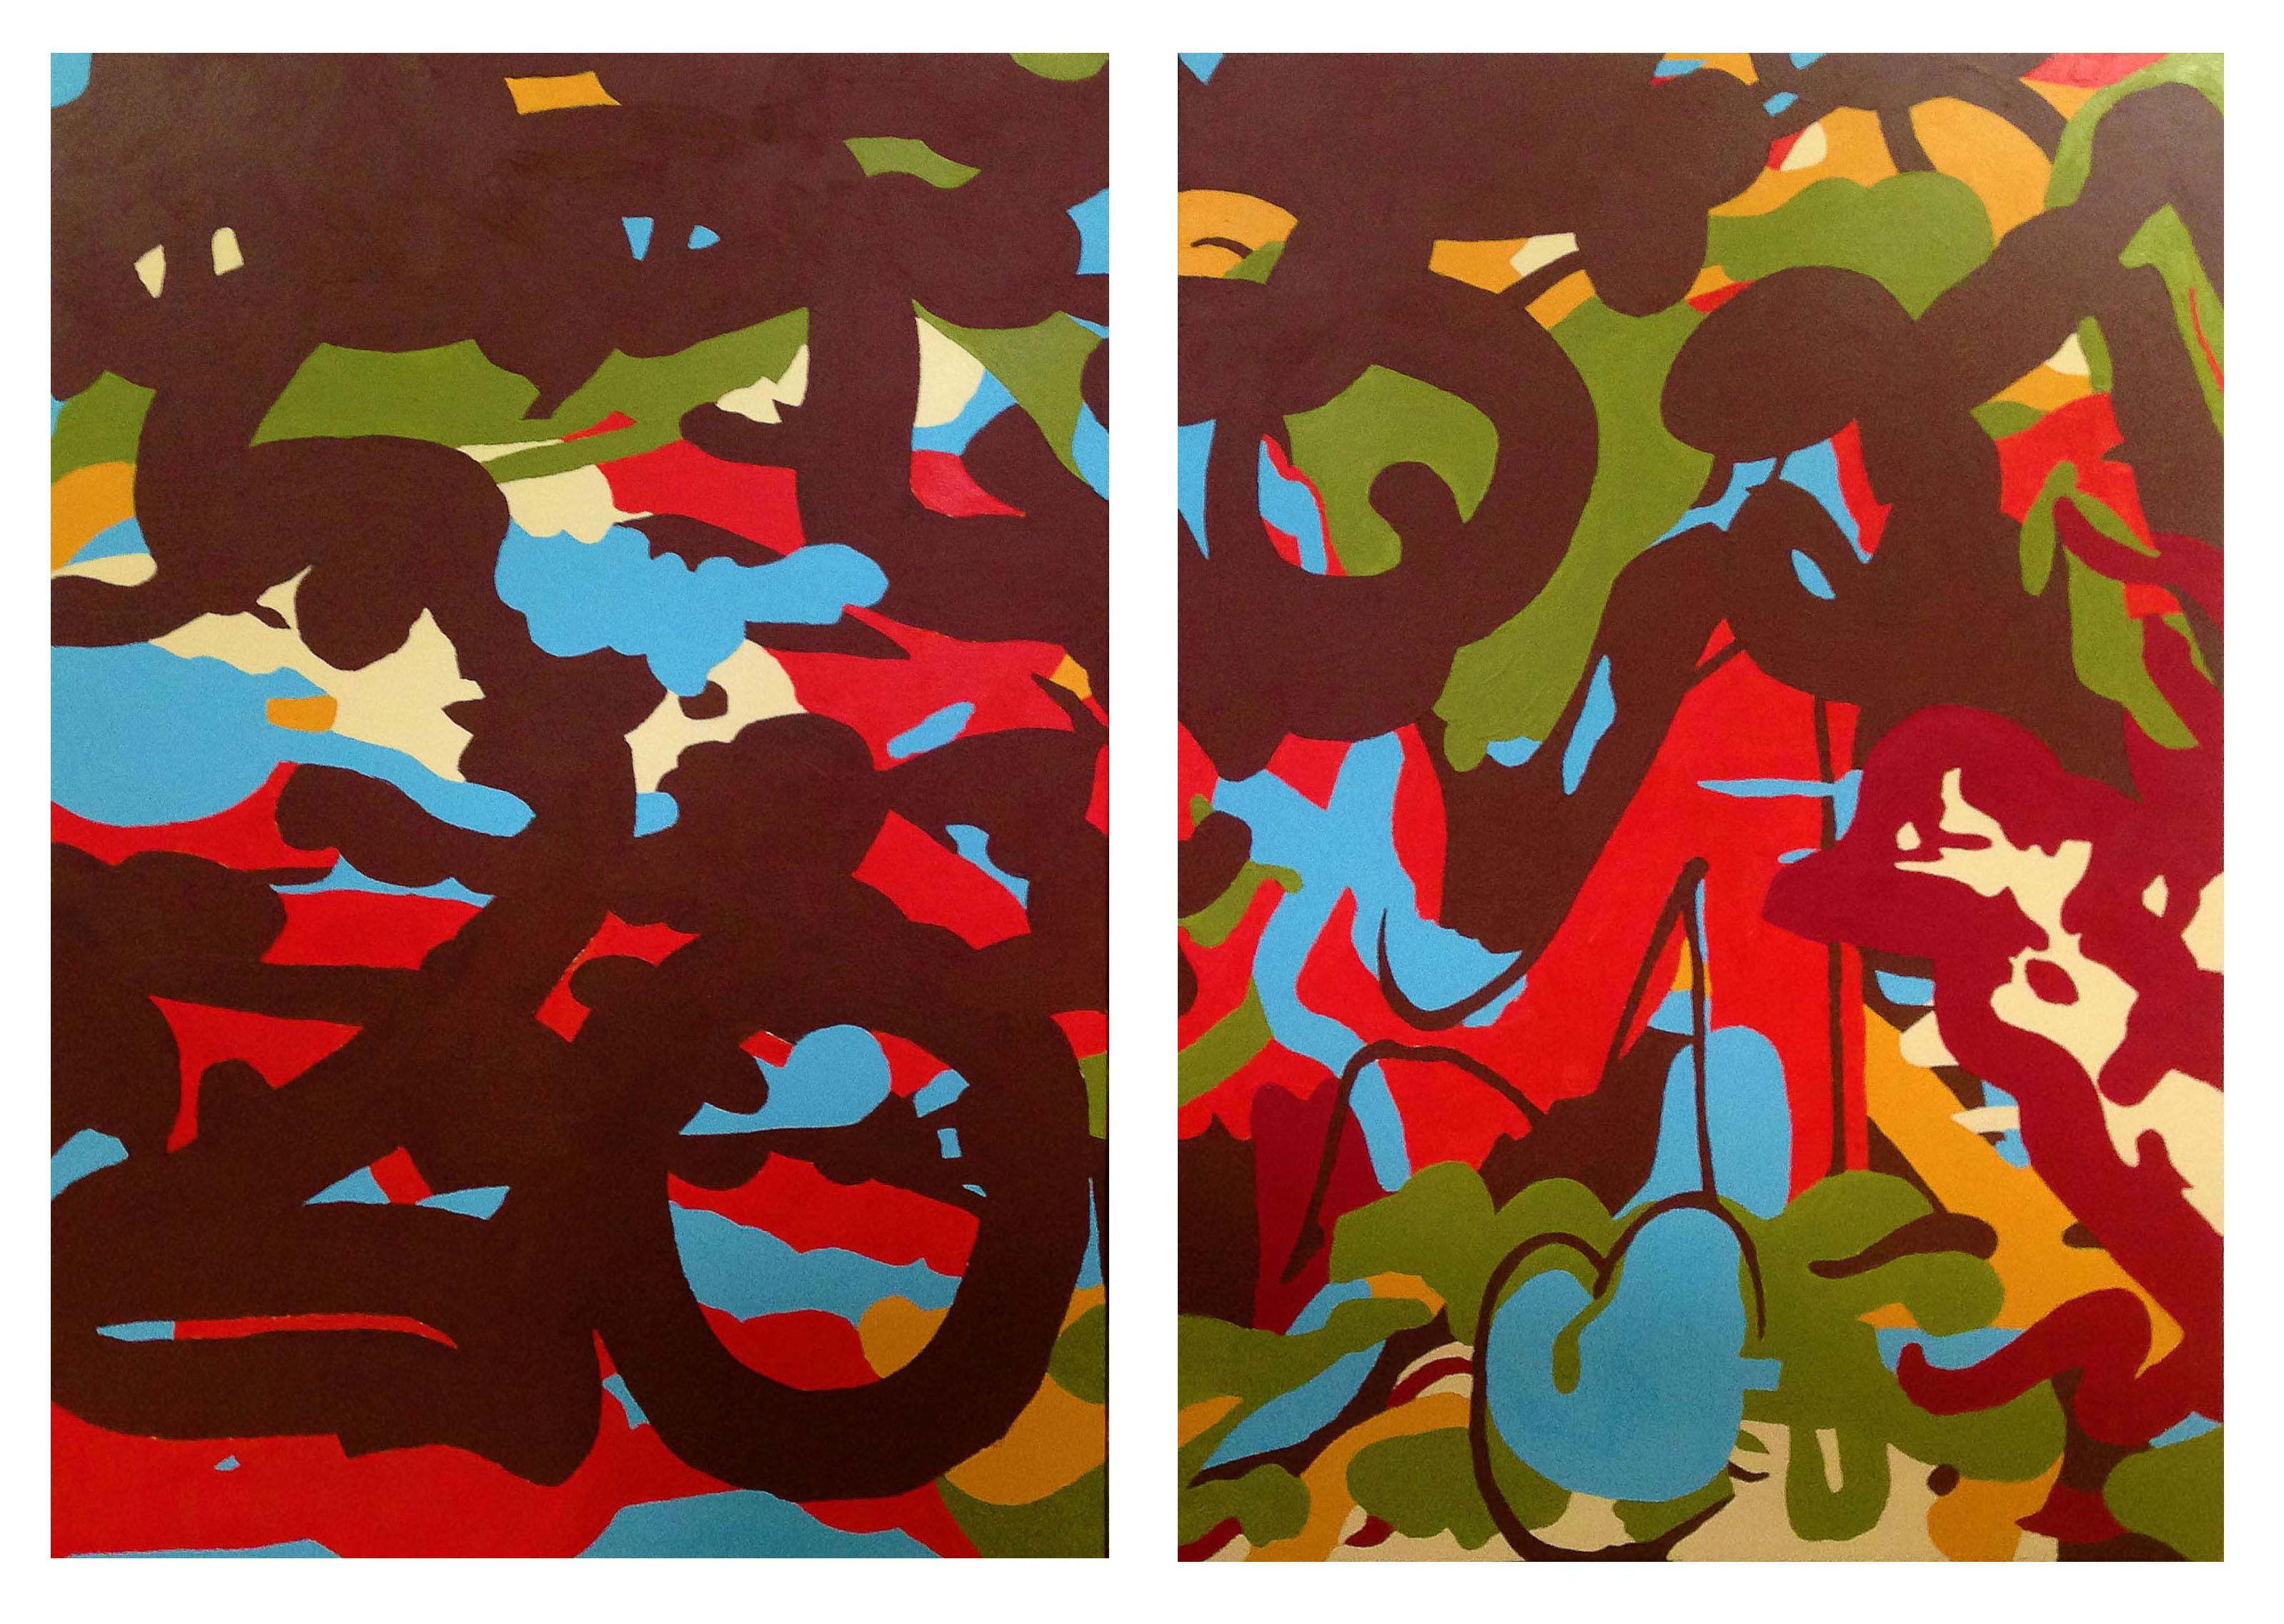 Paweł Myszka Abstract Painting - Diptych -  "Sympathy For The Strawberry" - Joyful, Expression, Pop, Street Art